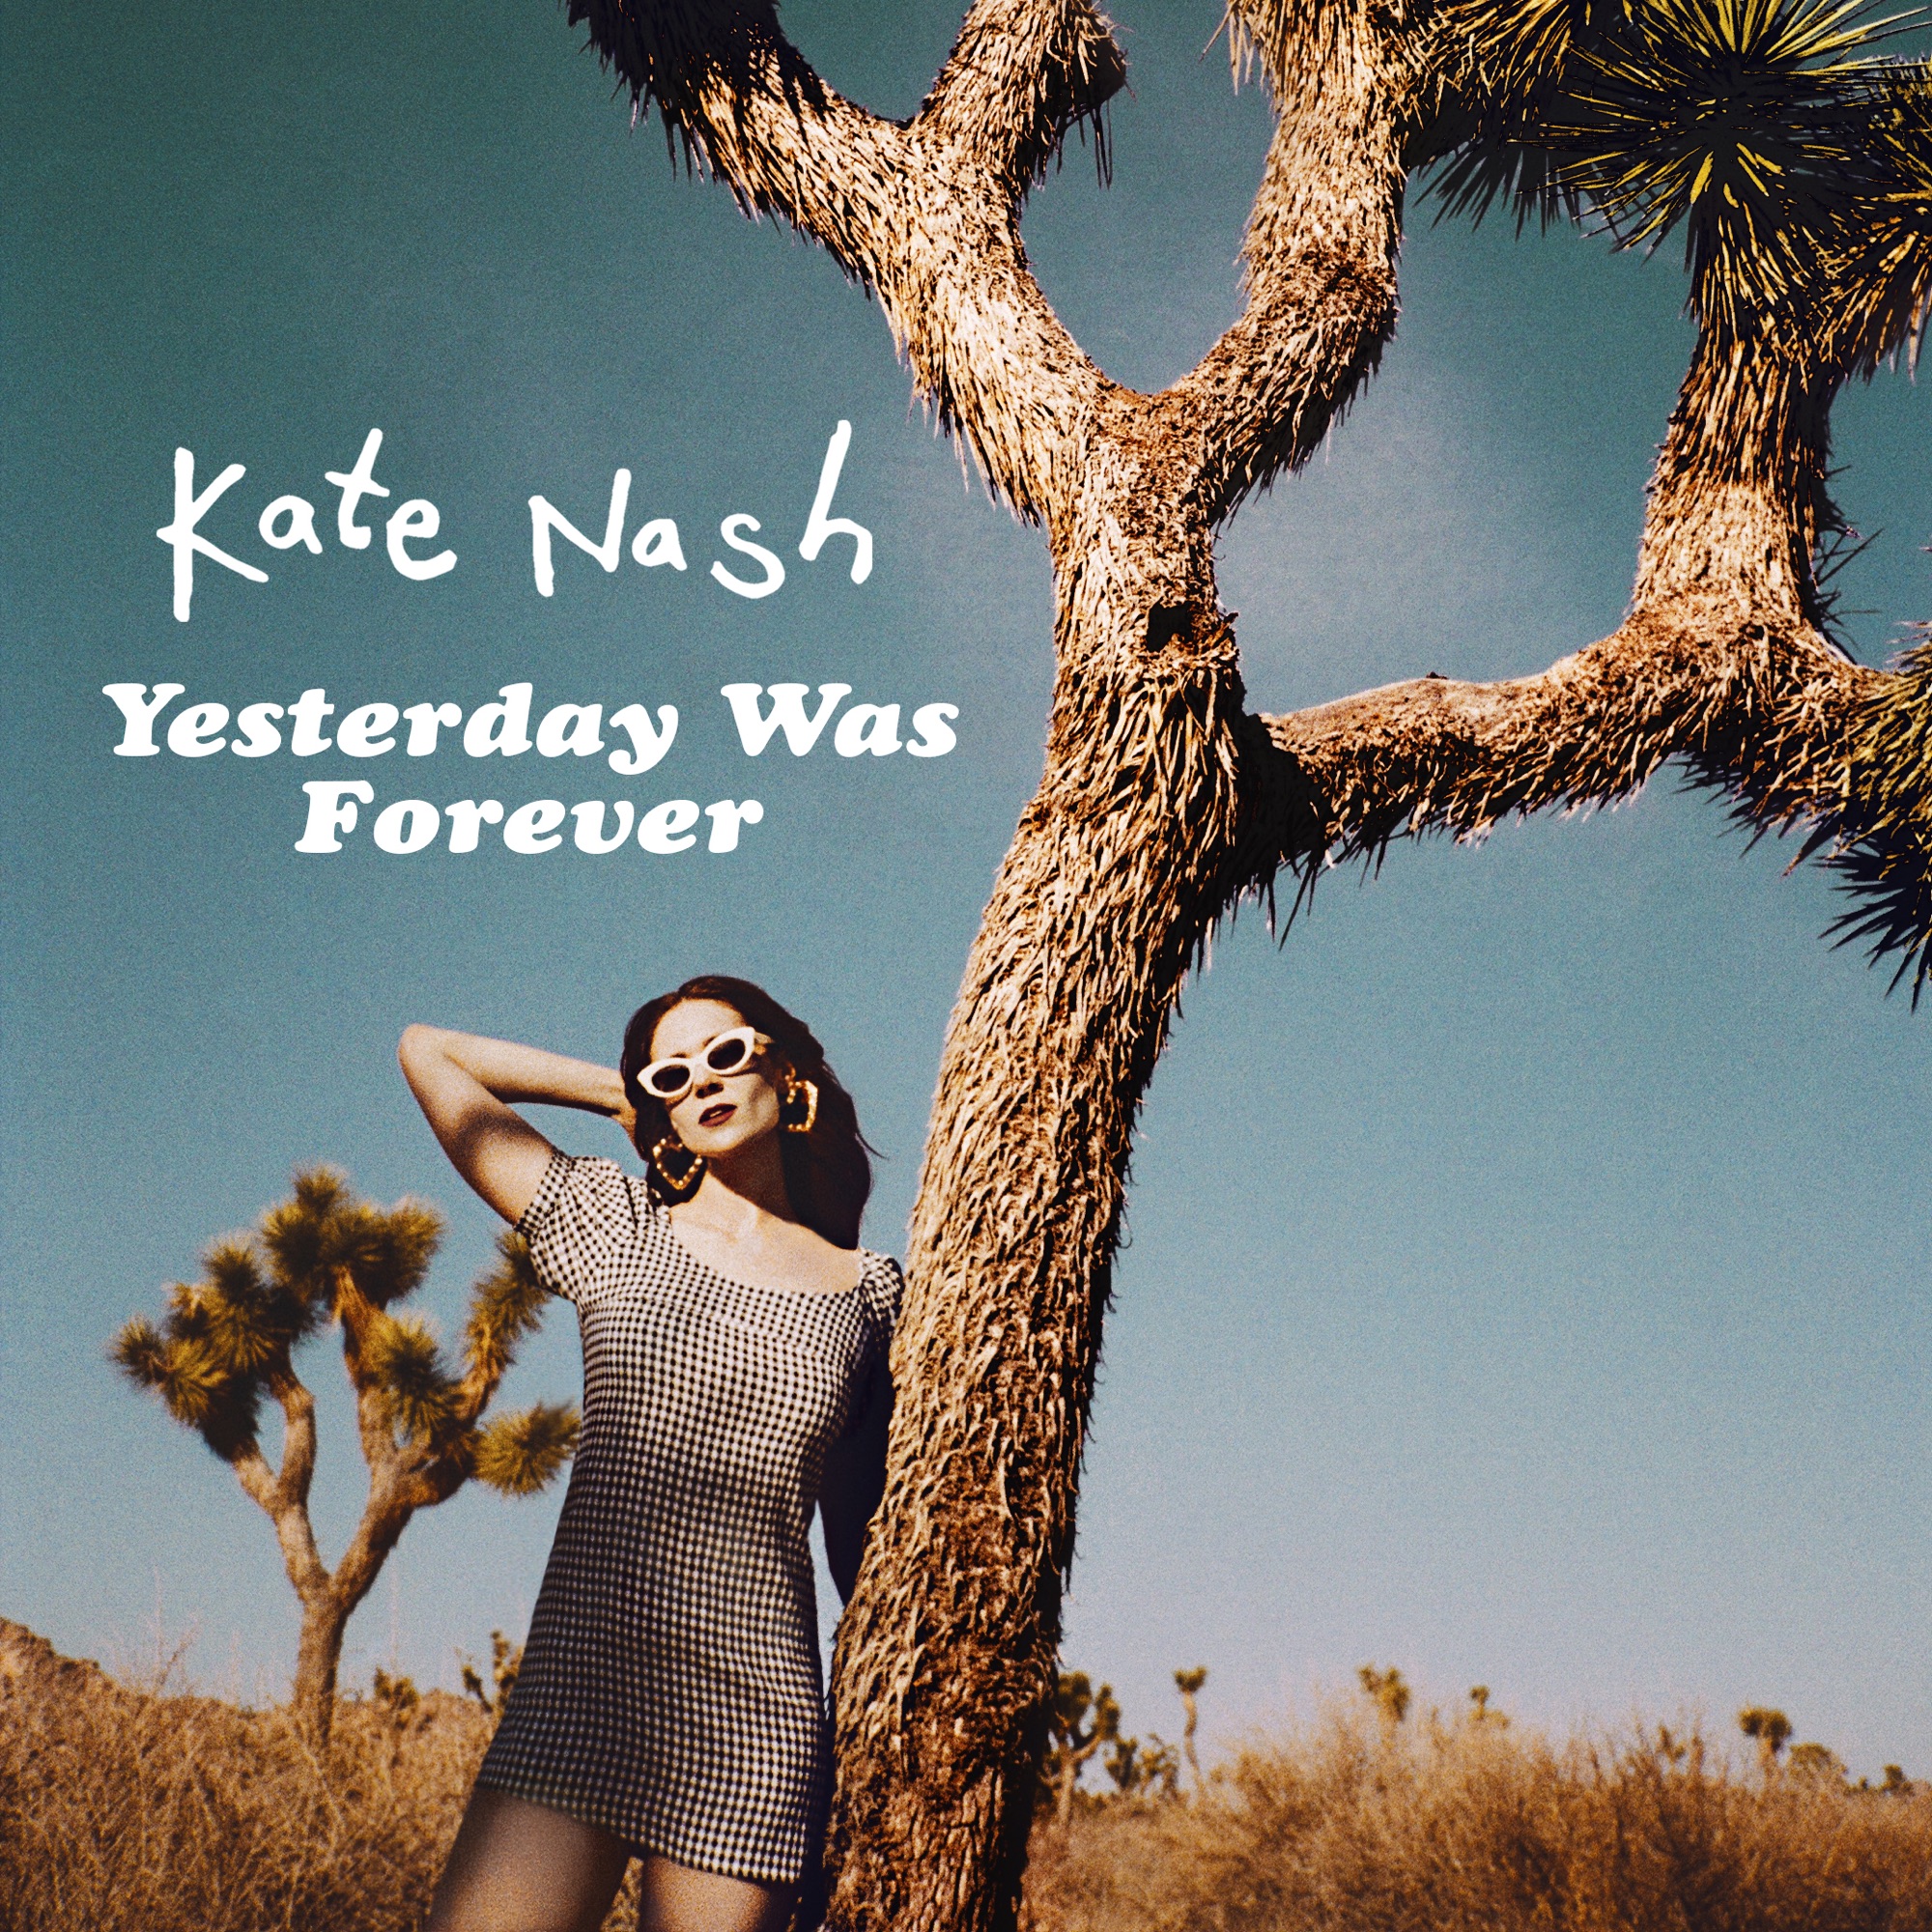 Kate Nash — Karaoke Kiss cover artwork